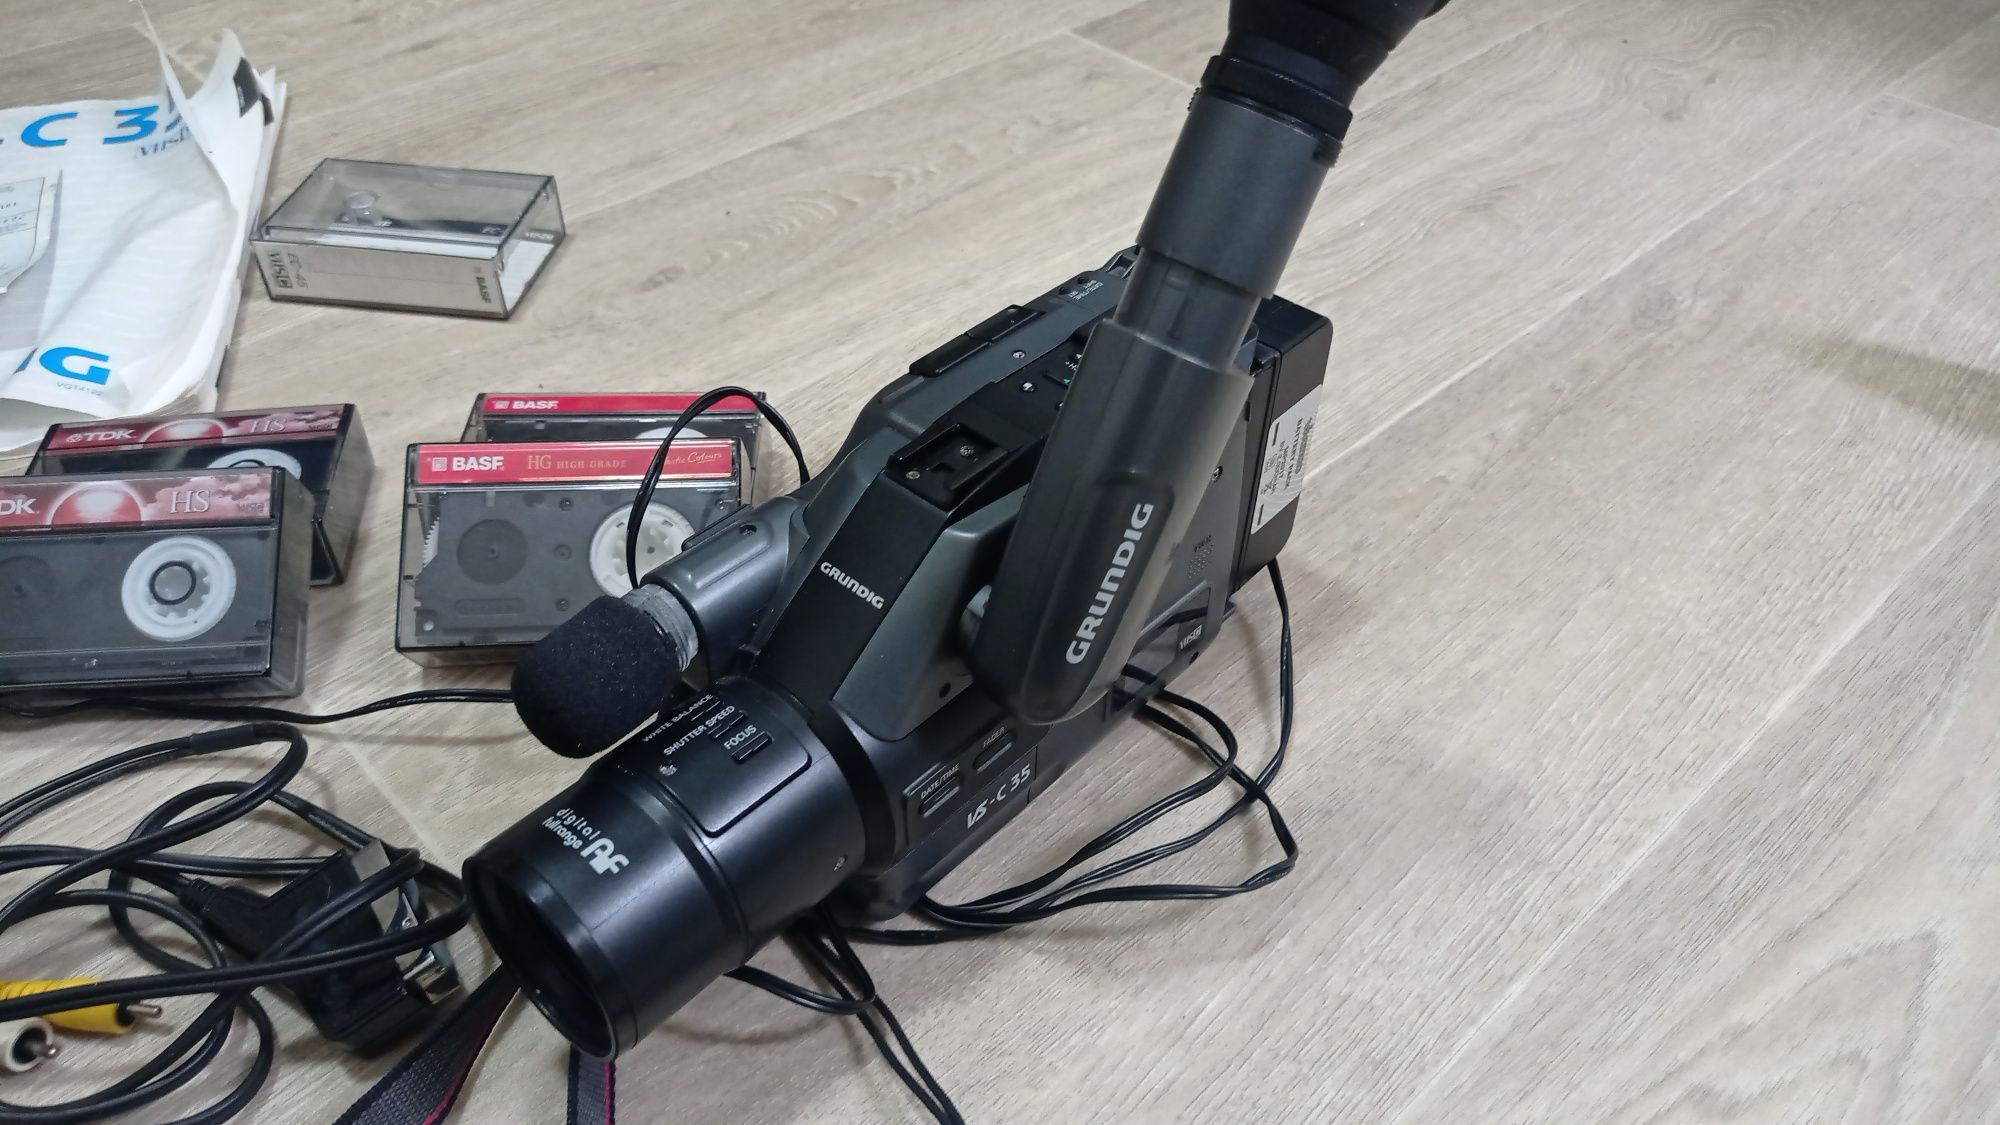 Grundig VS-C35 відеокамера VHS C